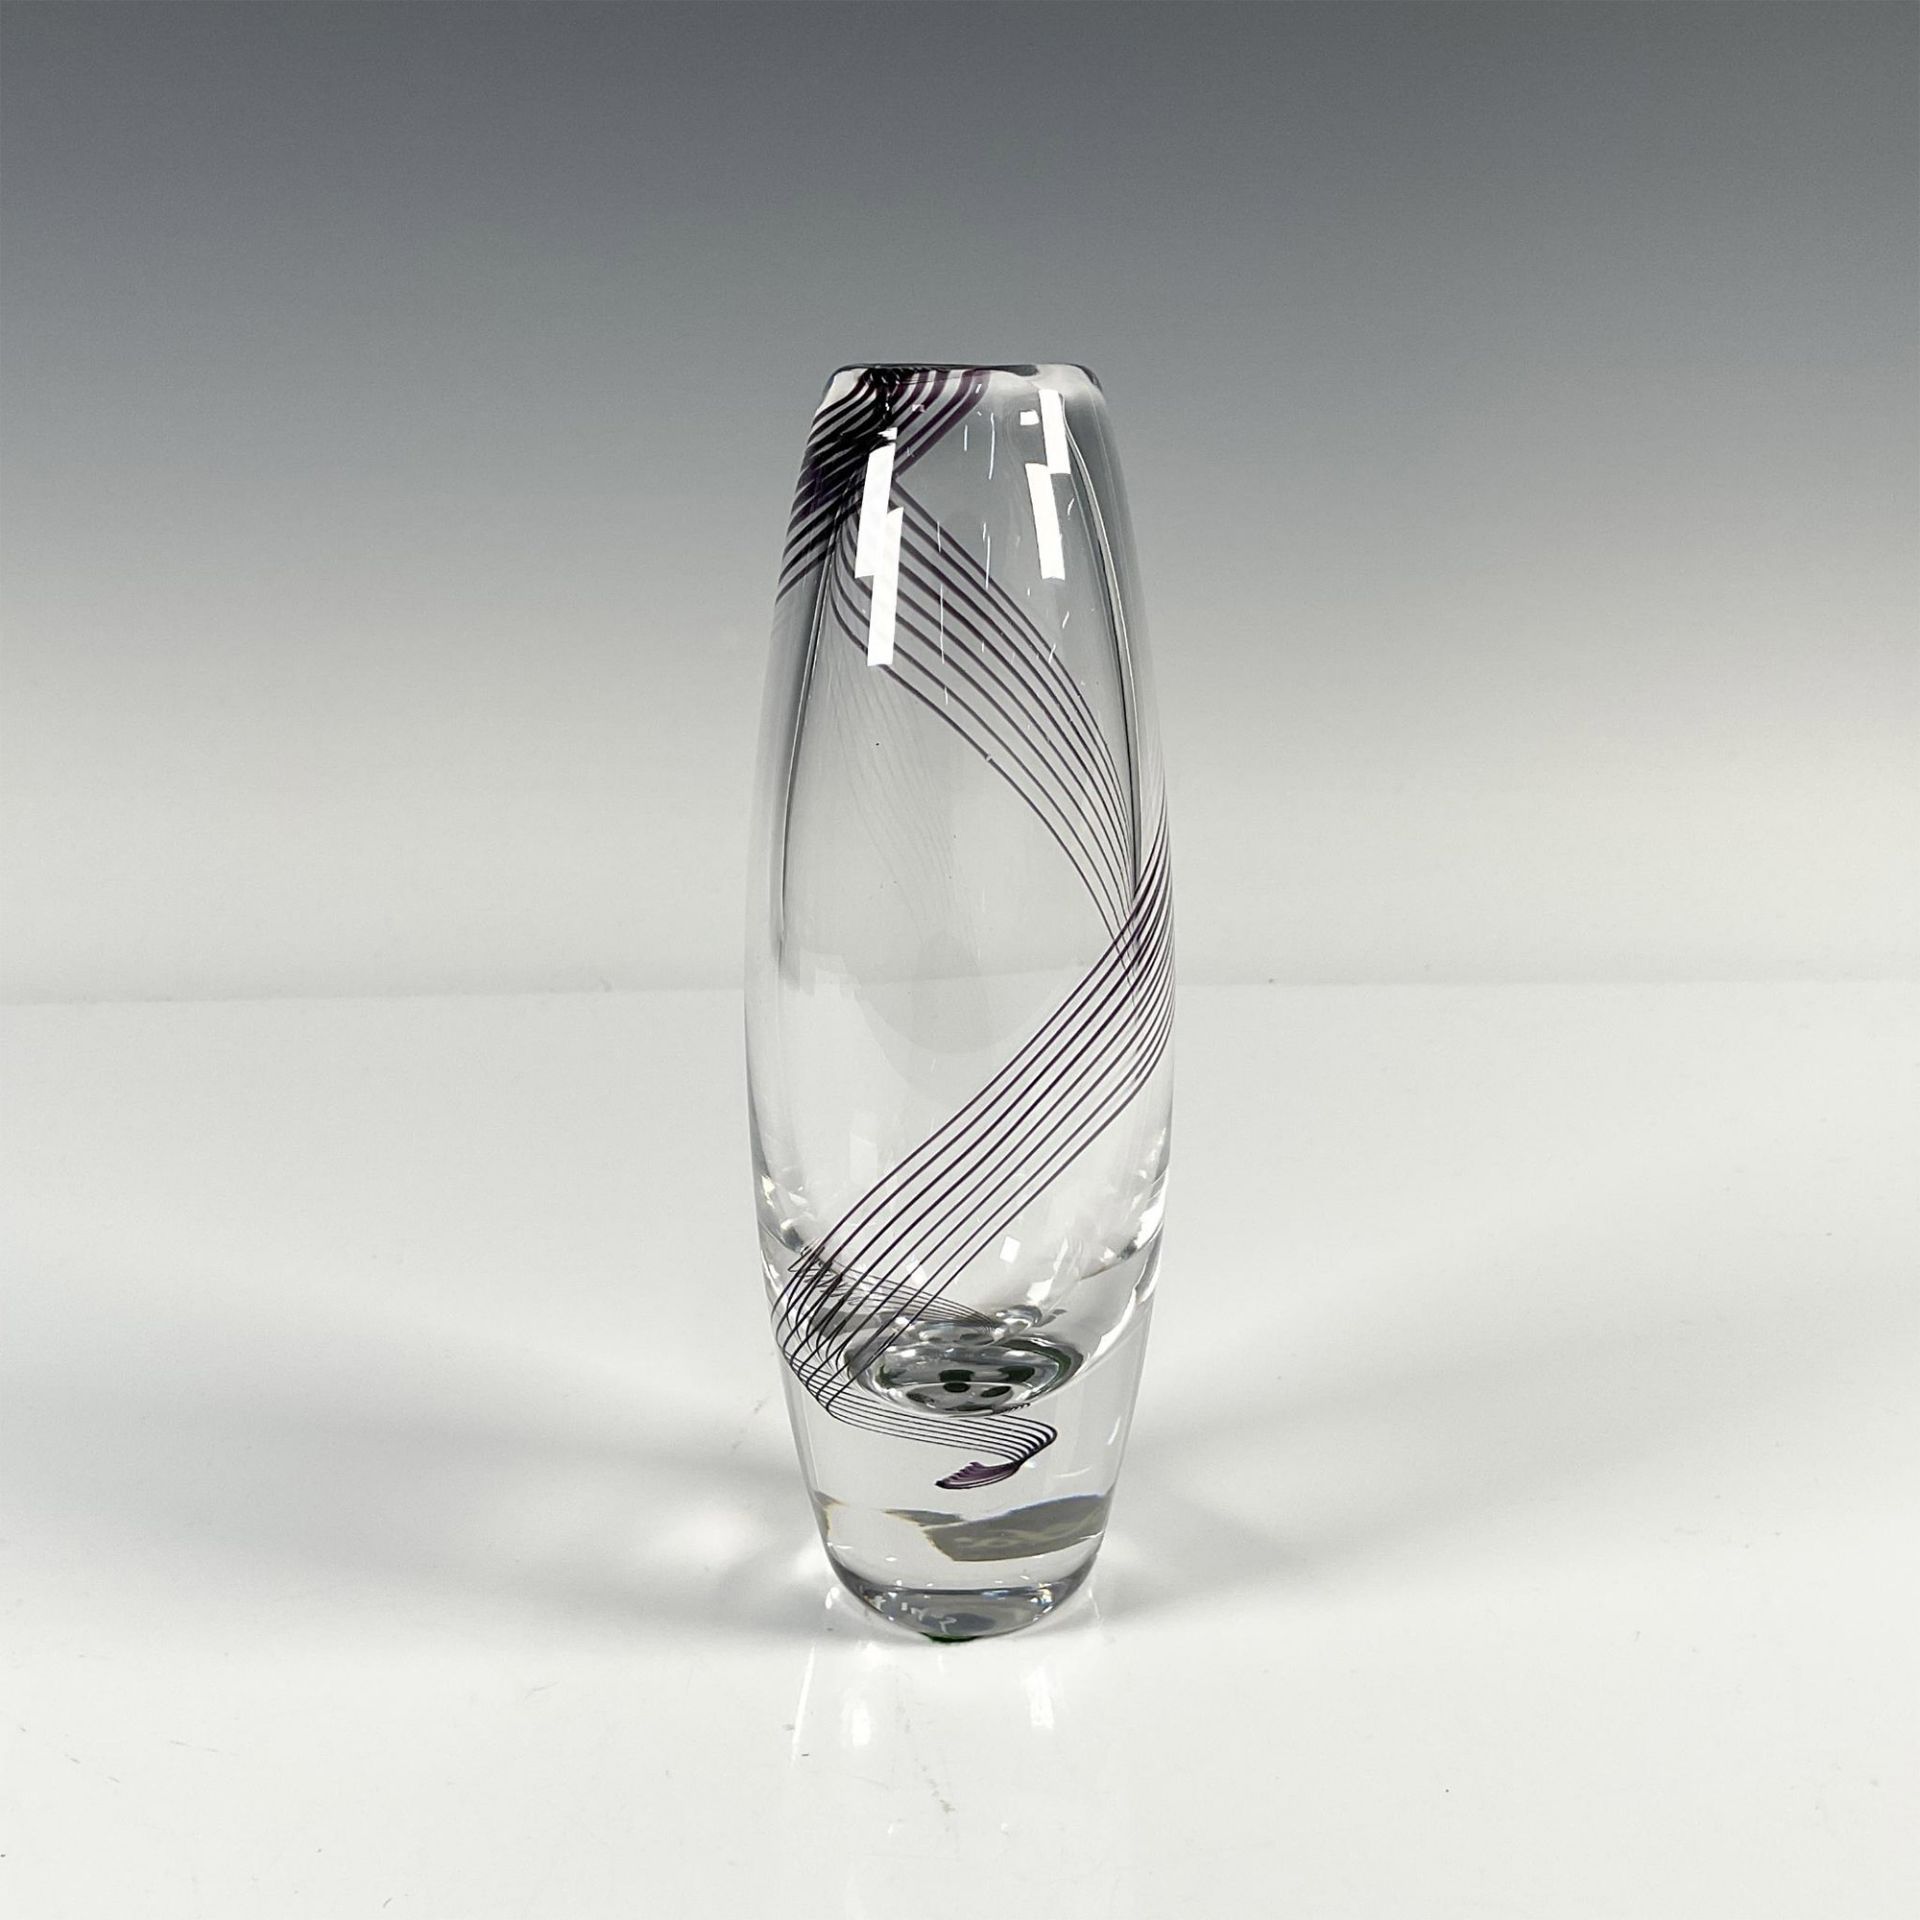 Kosta Boda Crystal Bud Vase With Black Swirl - Image 2 of 3